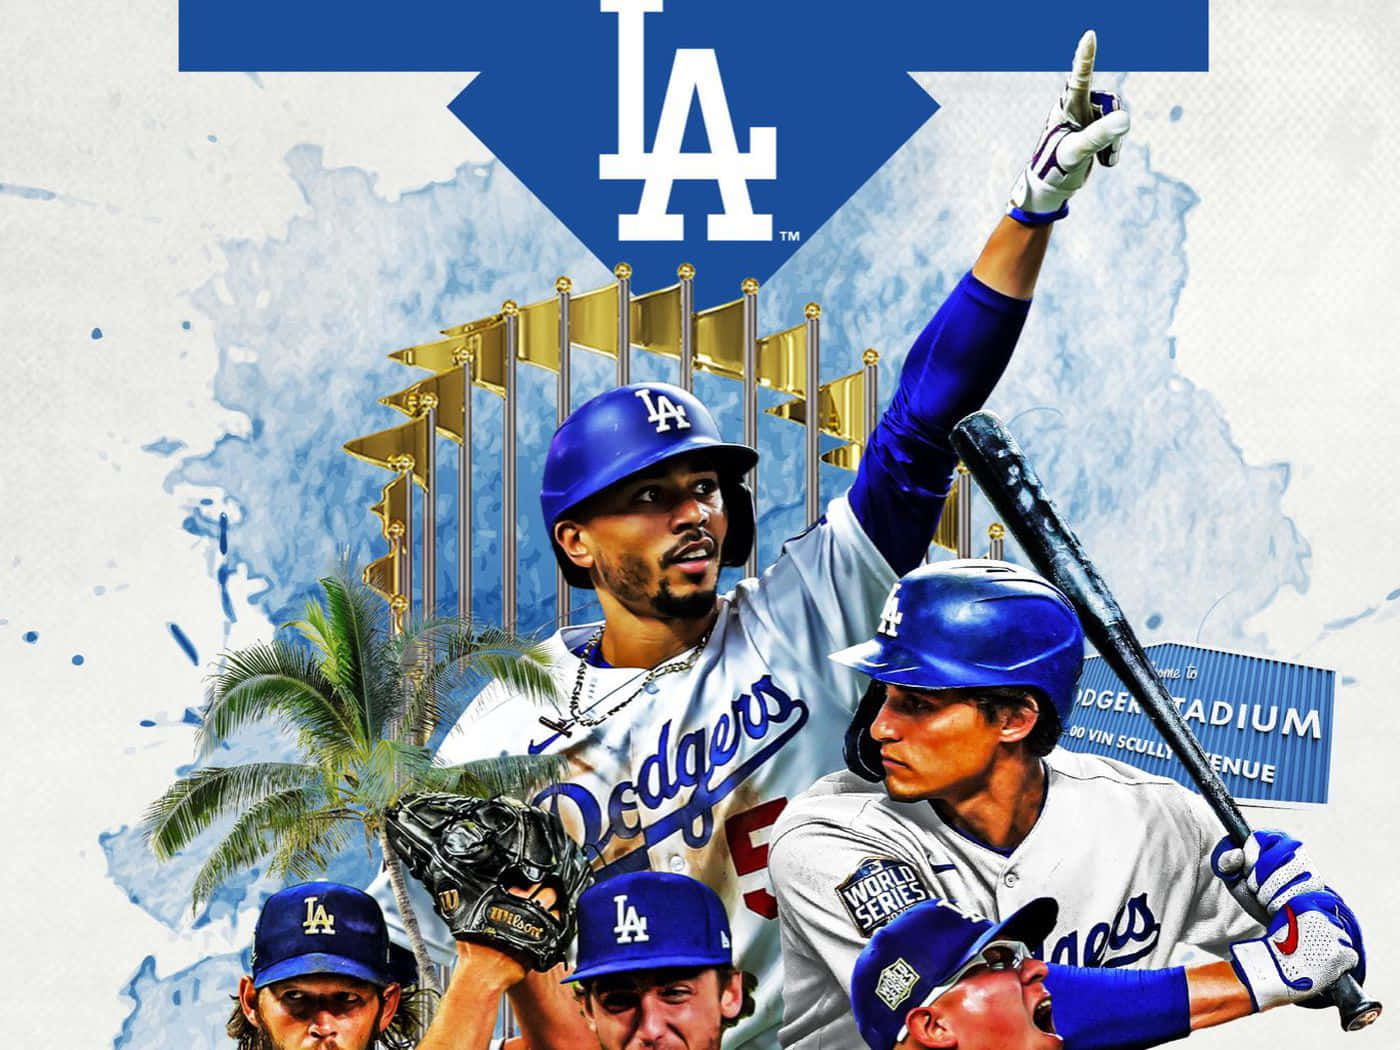 Logotipodel Equipo Los Angeles Dodgers